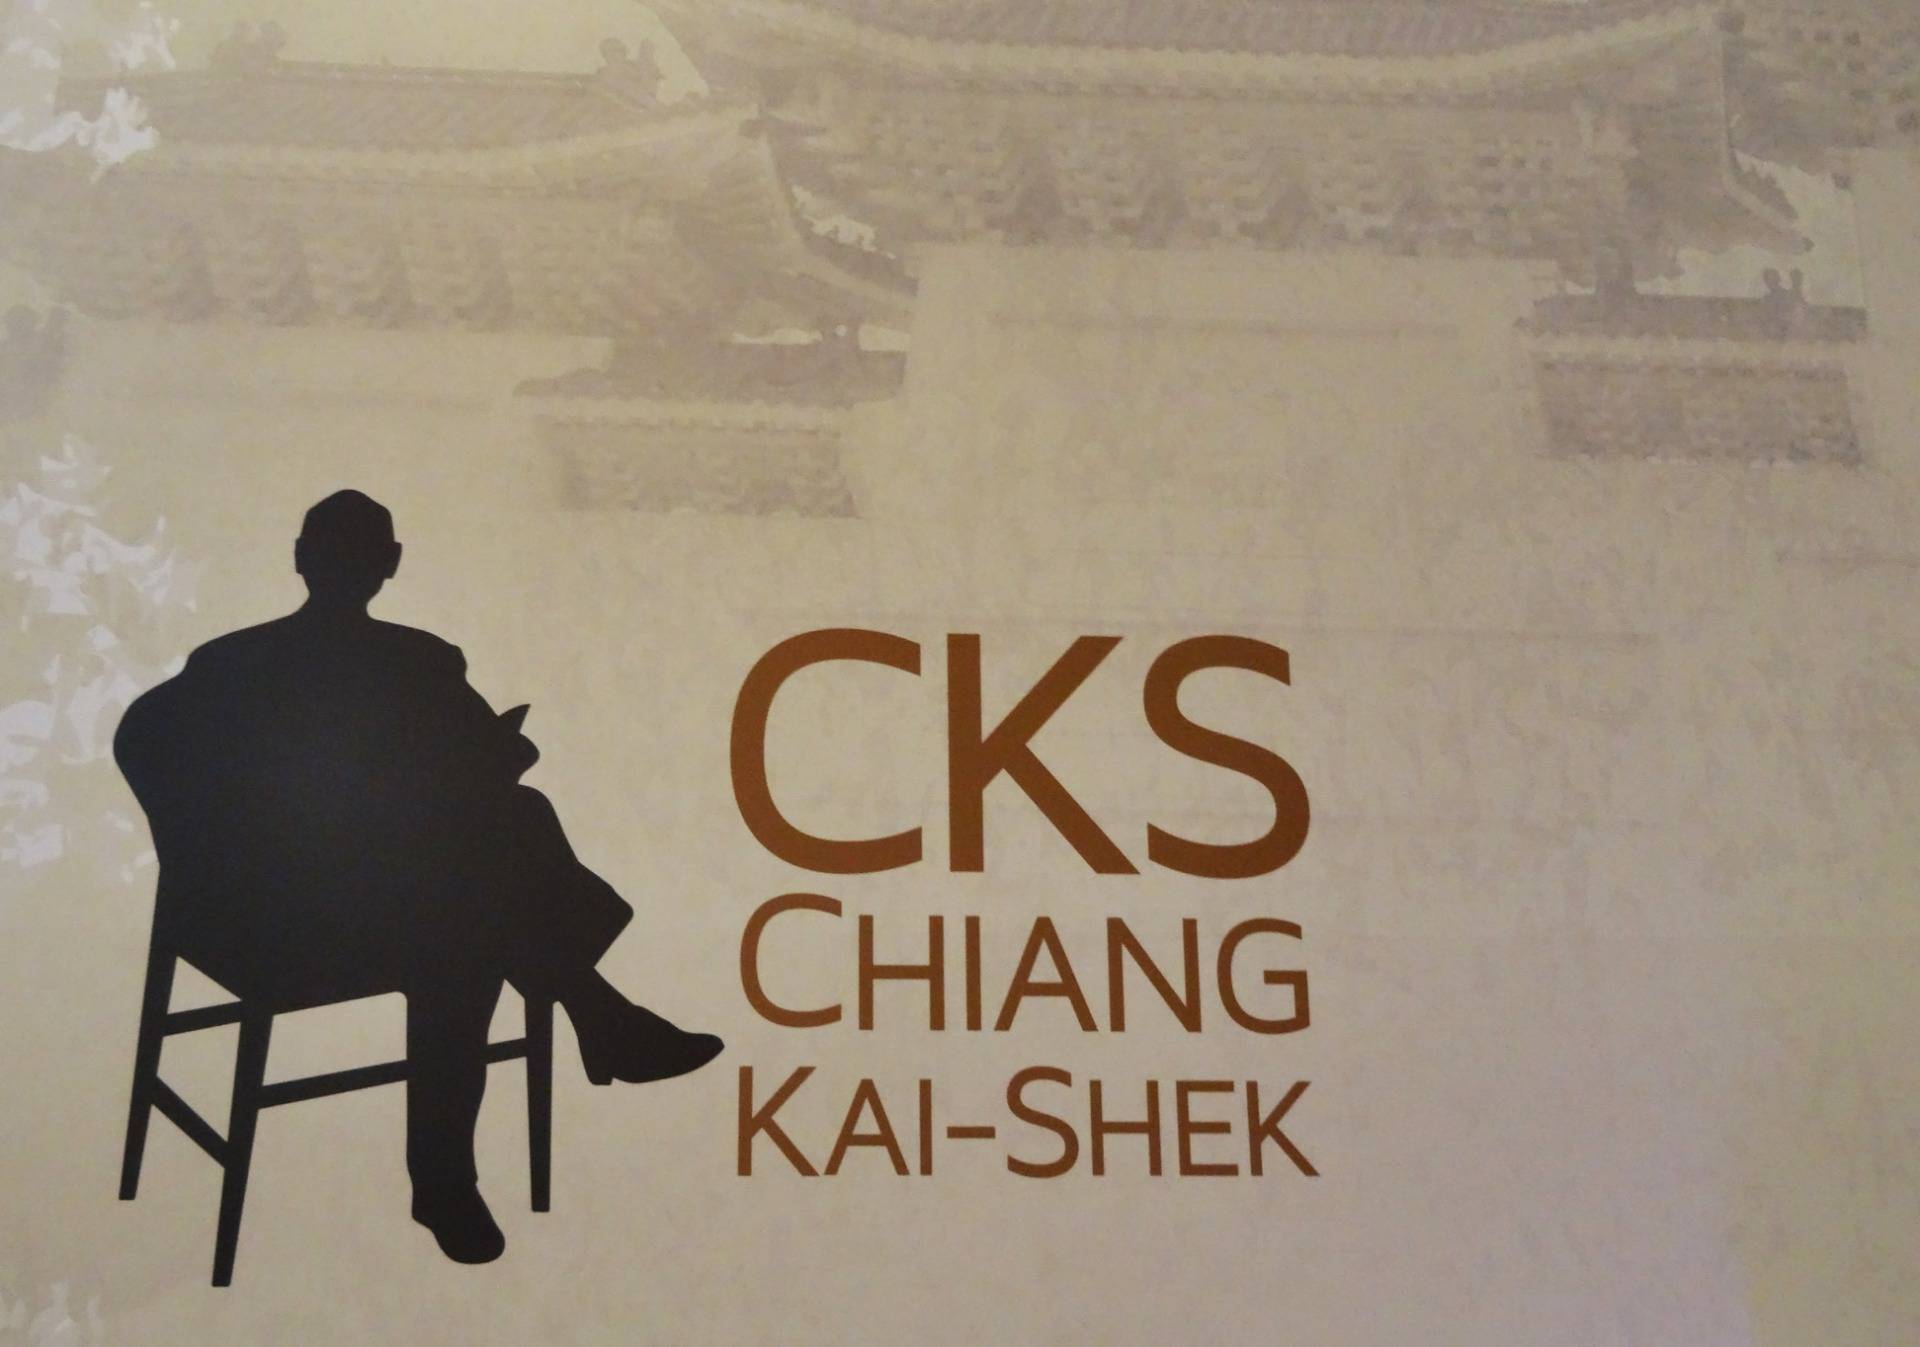 No, it isn’t Calvin Klain. It’s Chiang Kai-shek